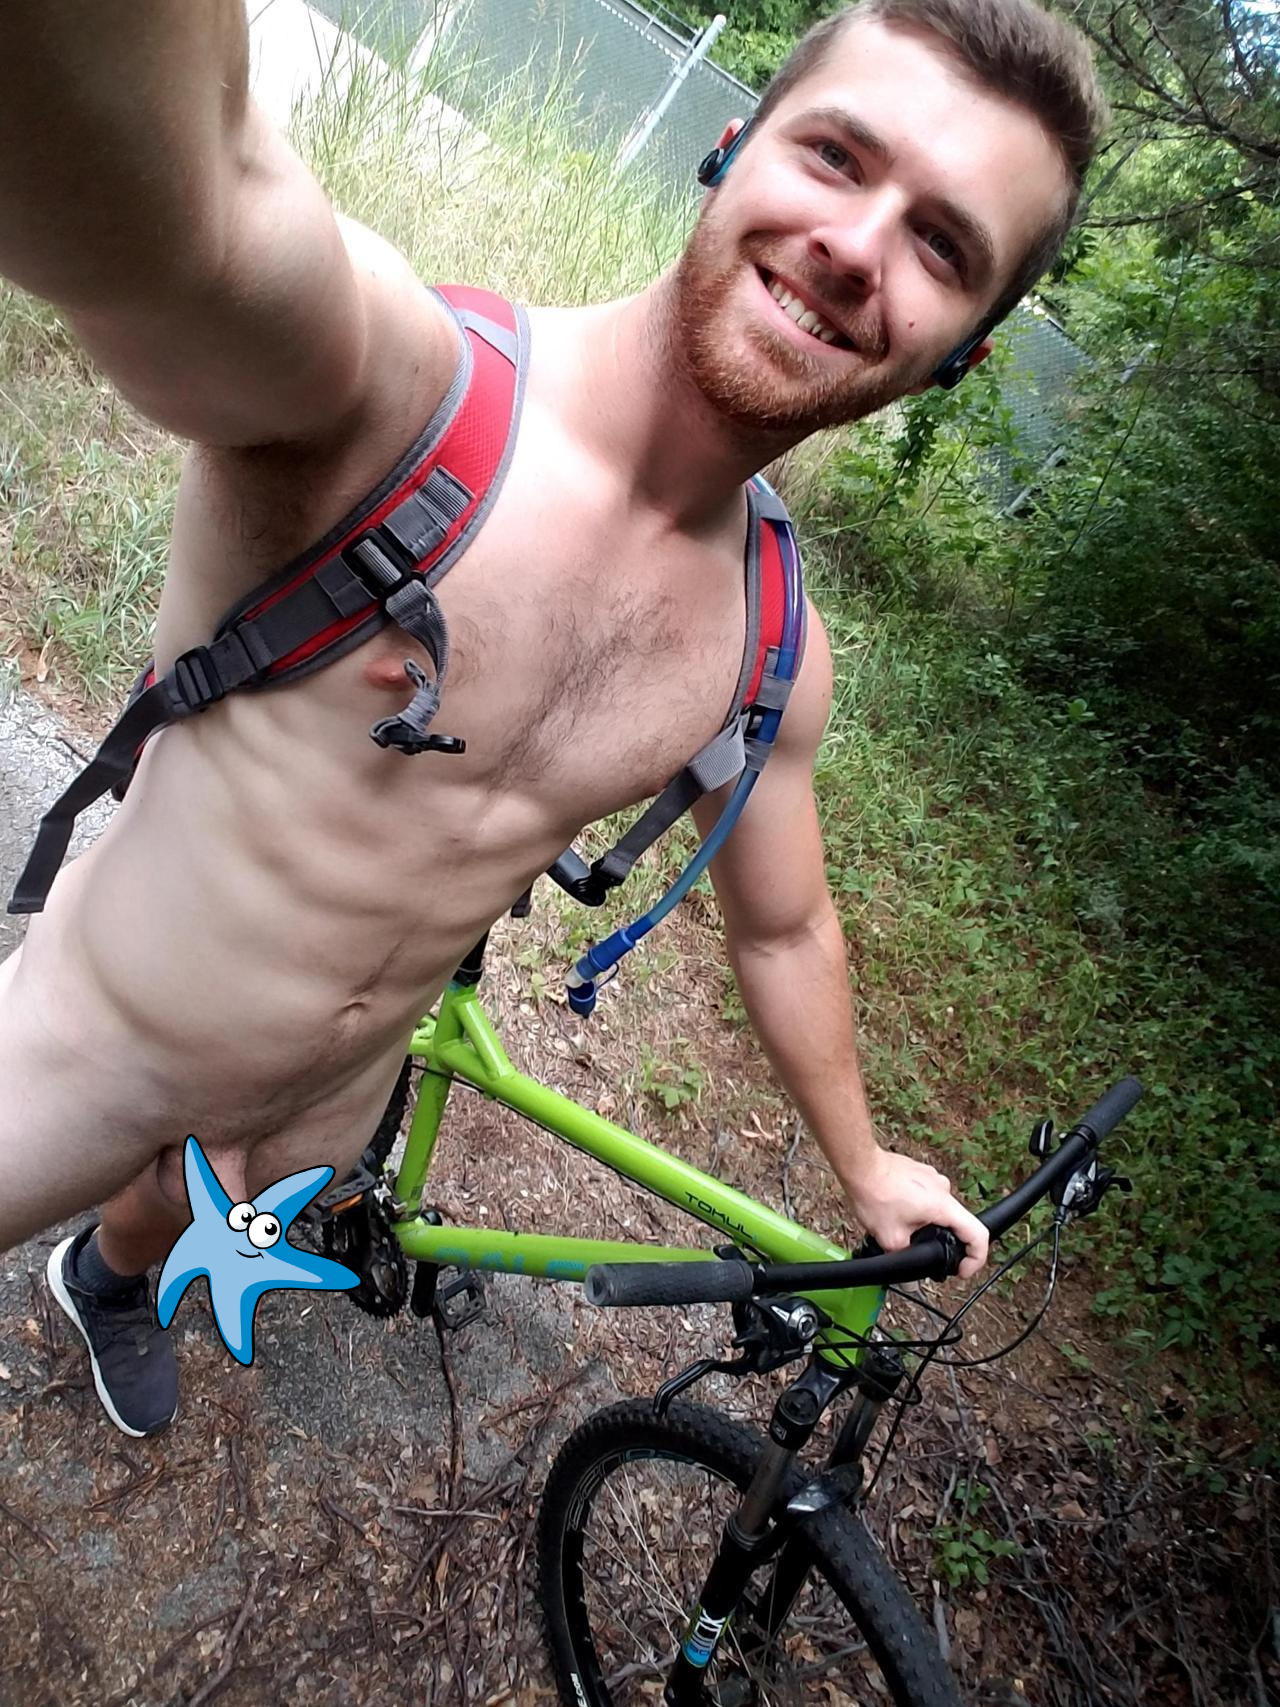 Bike guy with a boner